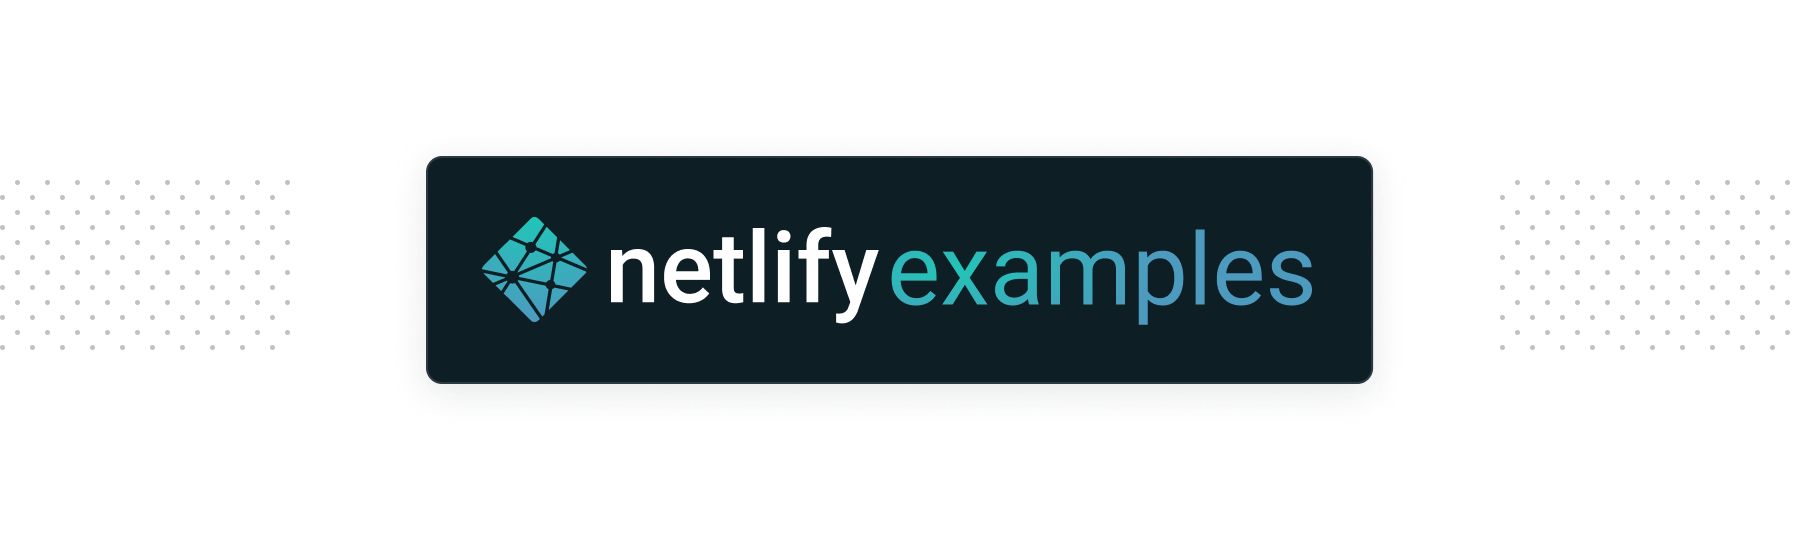 Netlify examples